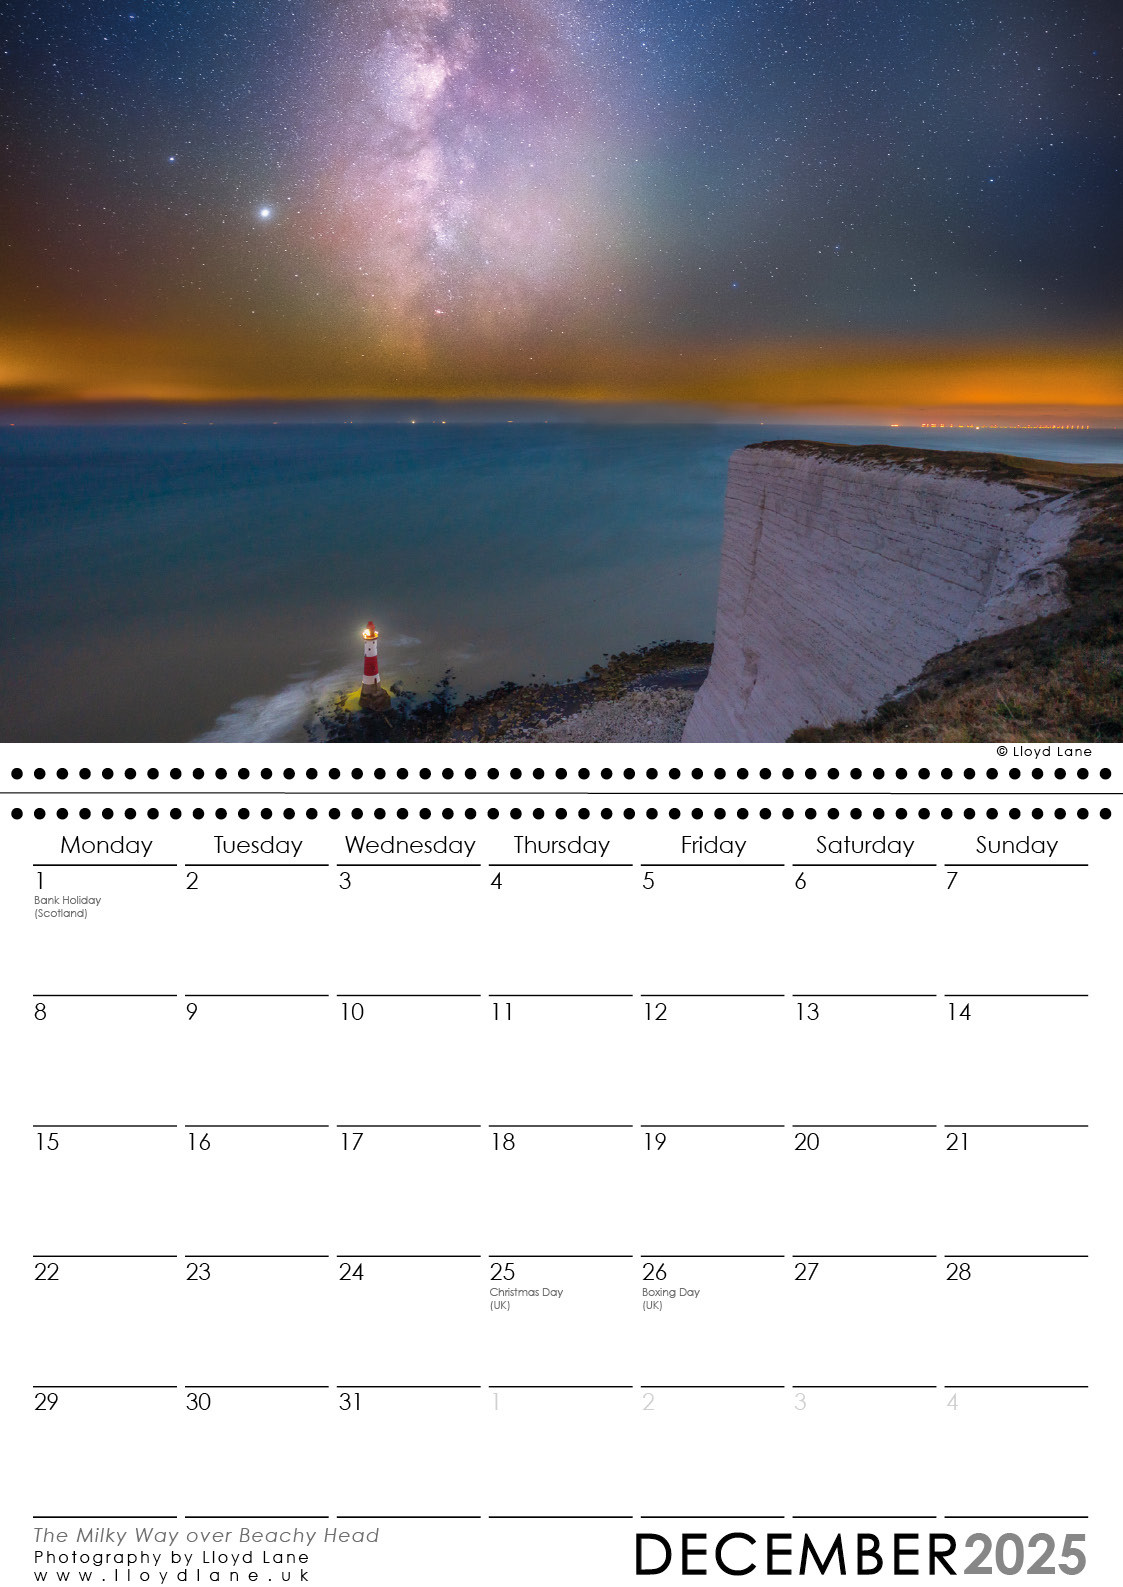 Sussex Calendar 2025 - Beachy Head under the Milky Way